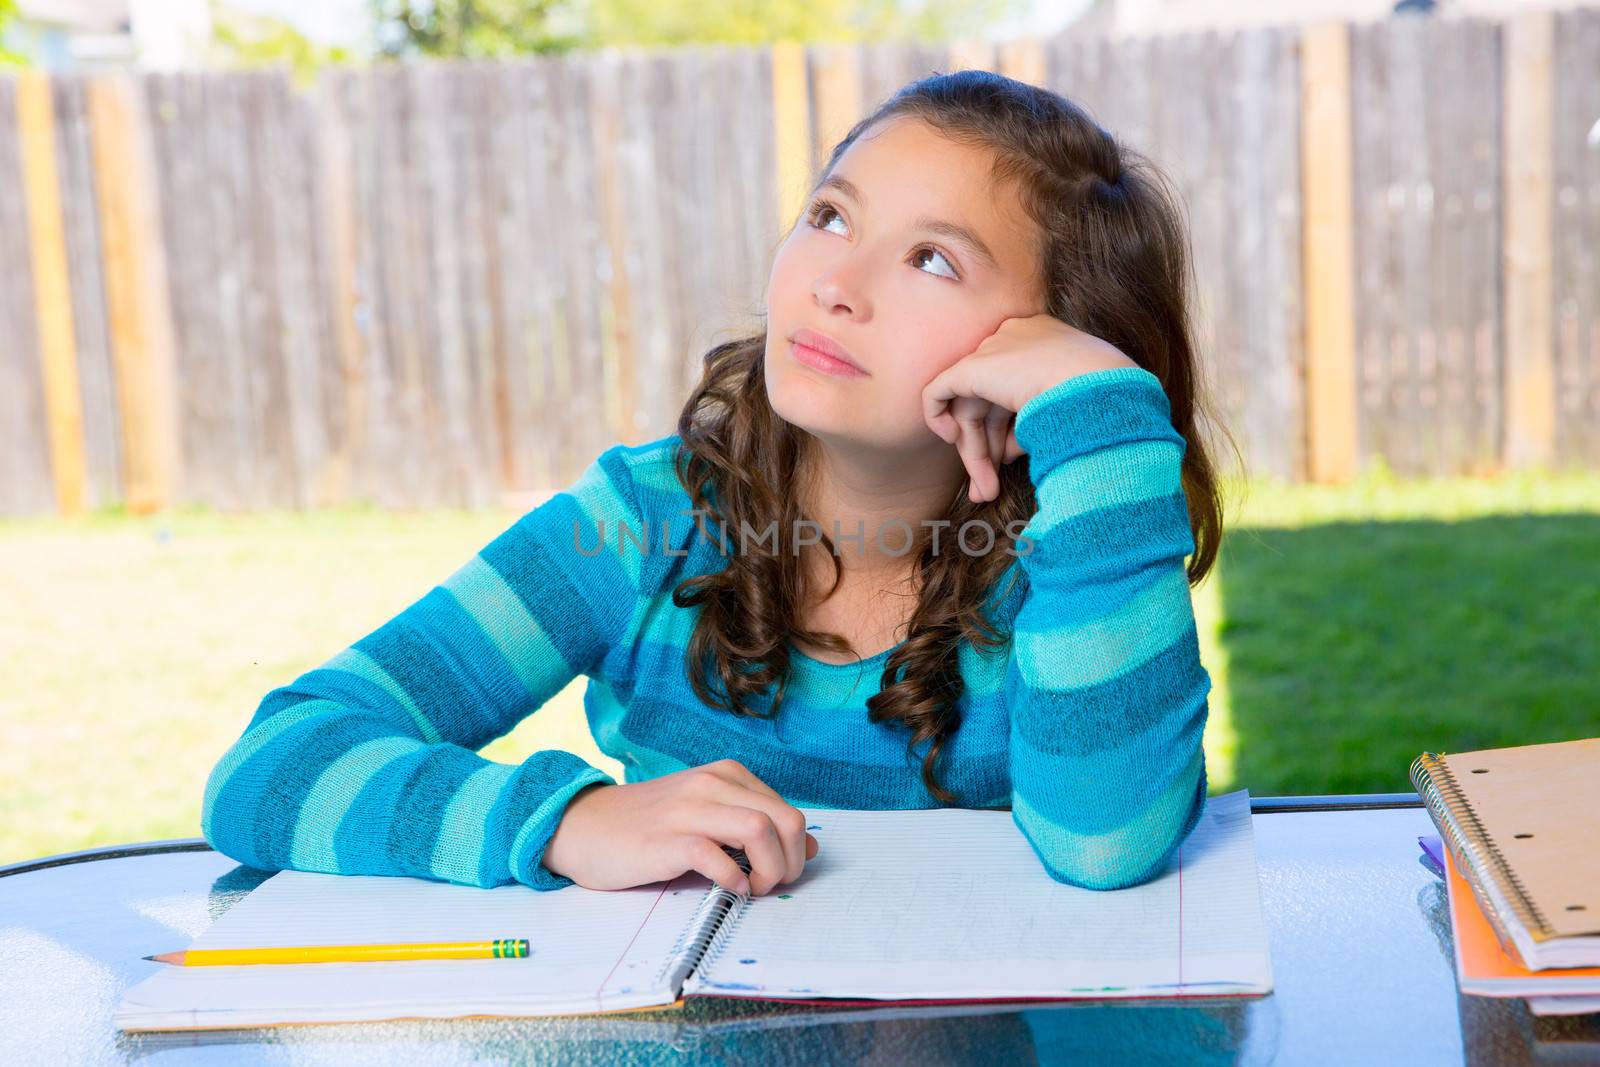 American latin teen girl relaxed on table doing homework on backyard